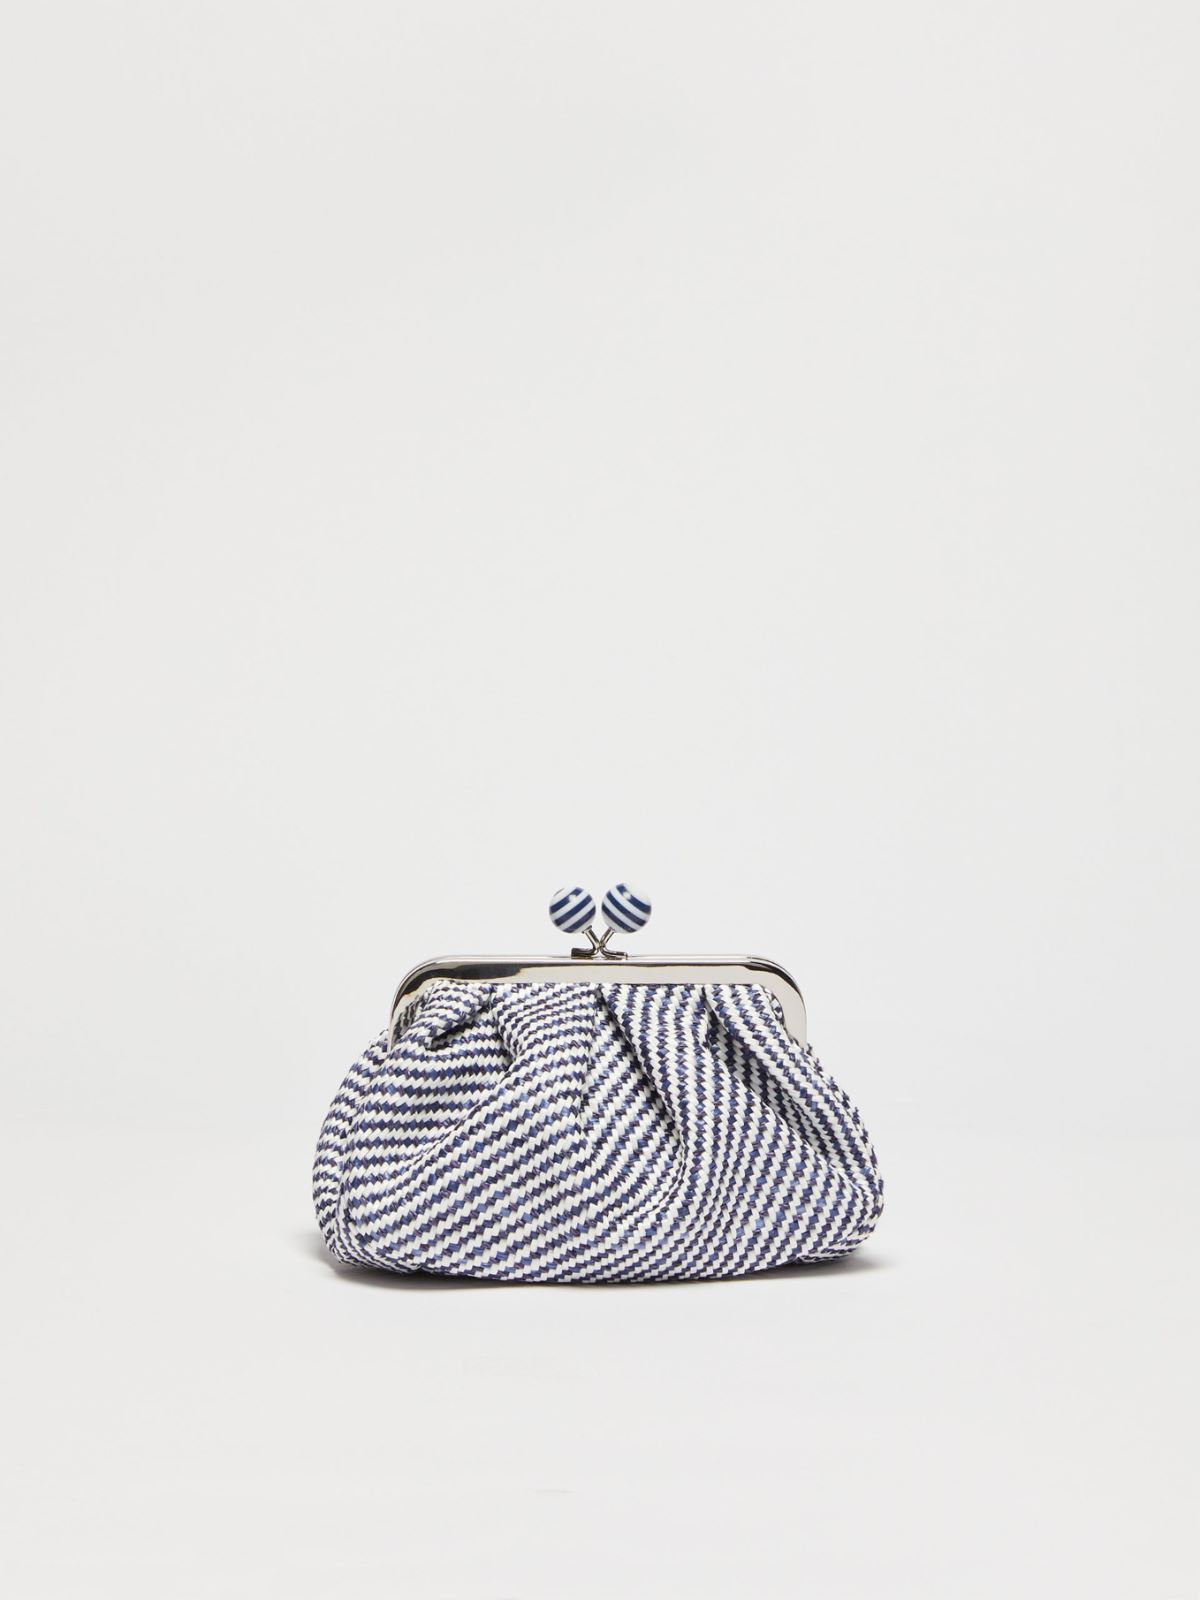 Small Pasticcino Bag in raffia - MIDNIGHTBLUE - Weekend Max Mara - 3